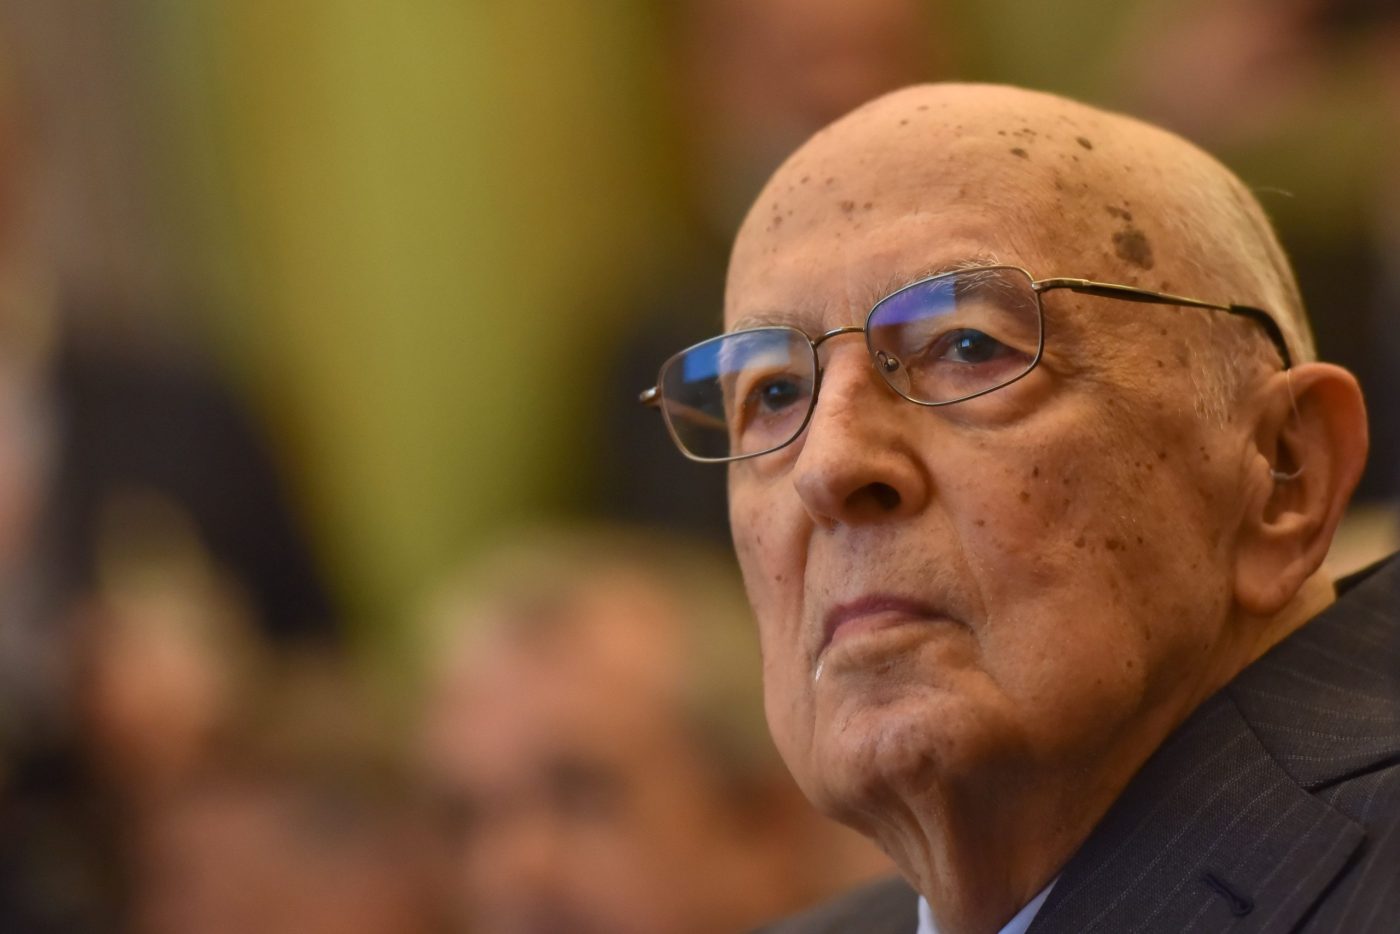 Giorgio Napolitano life and legacy